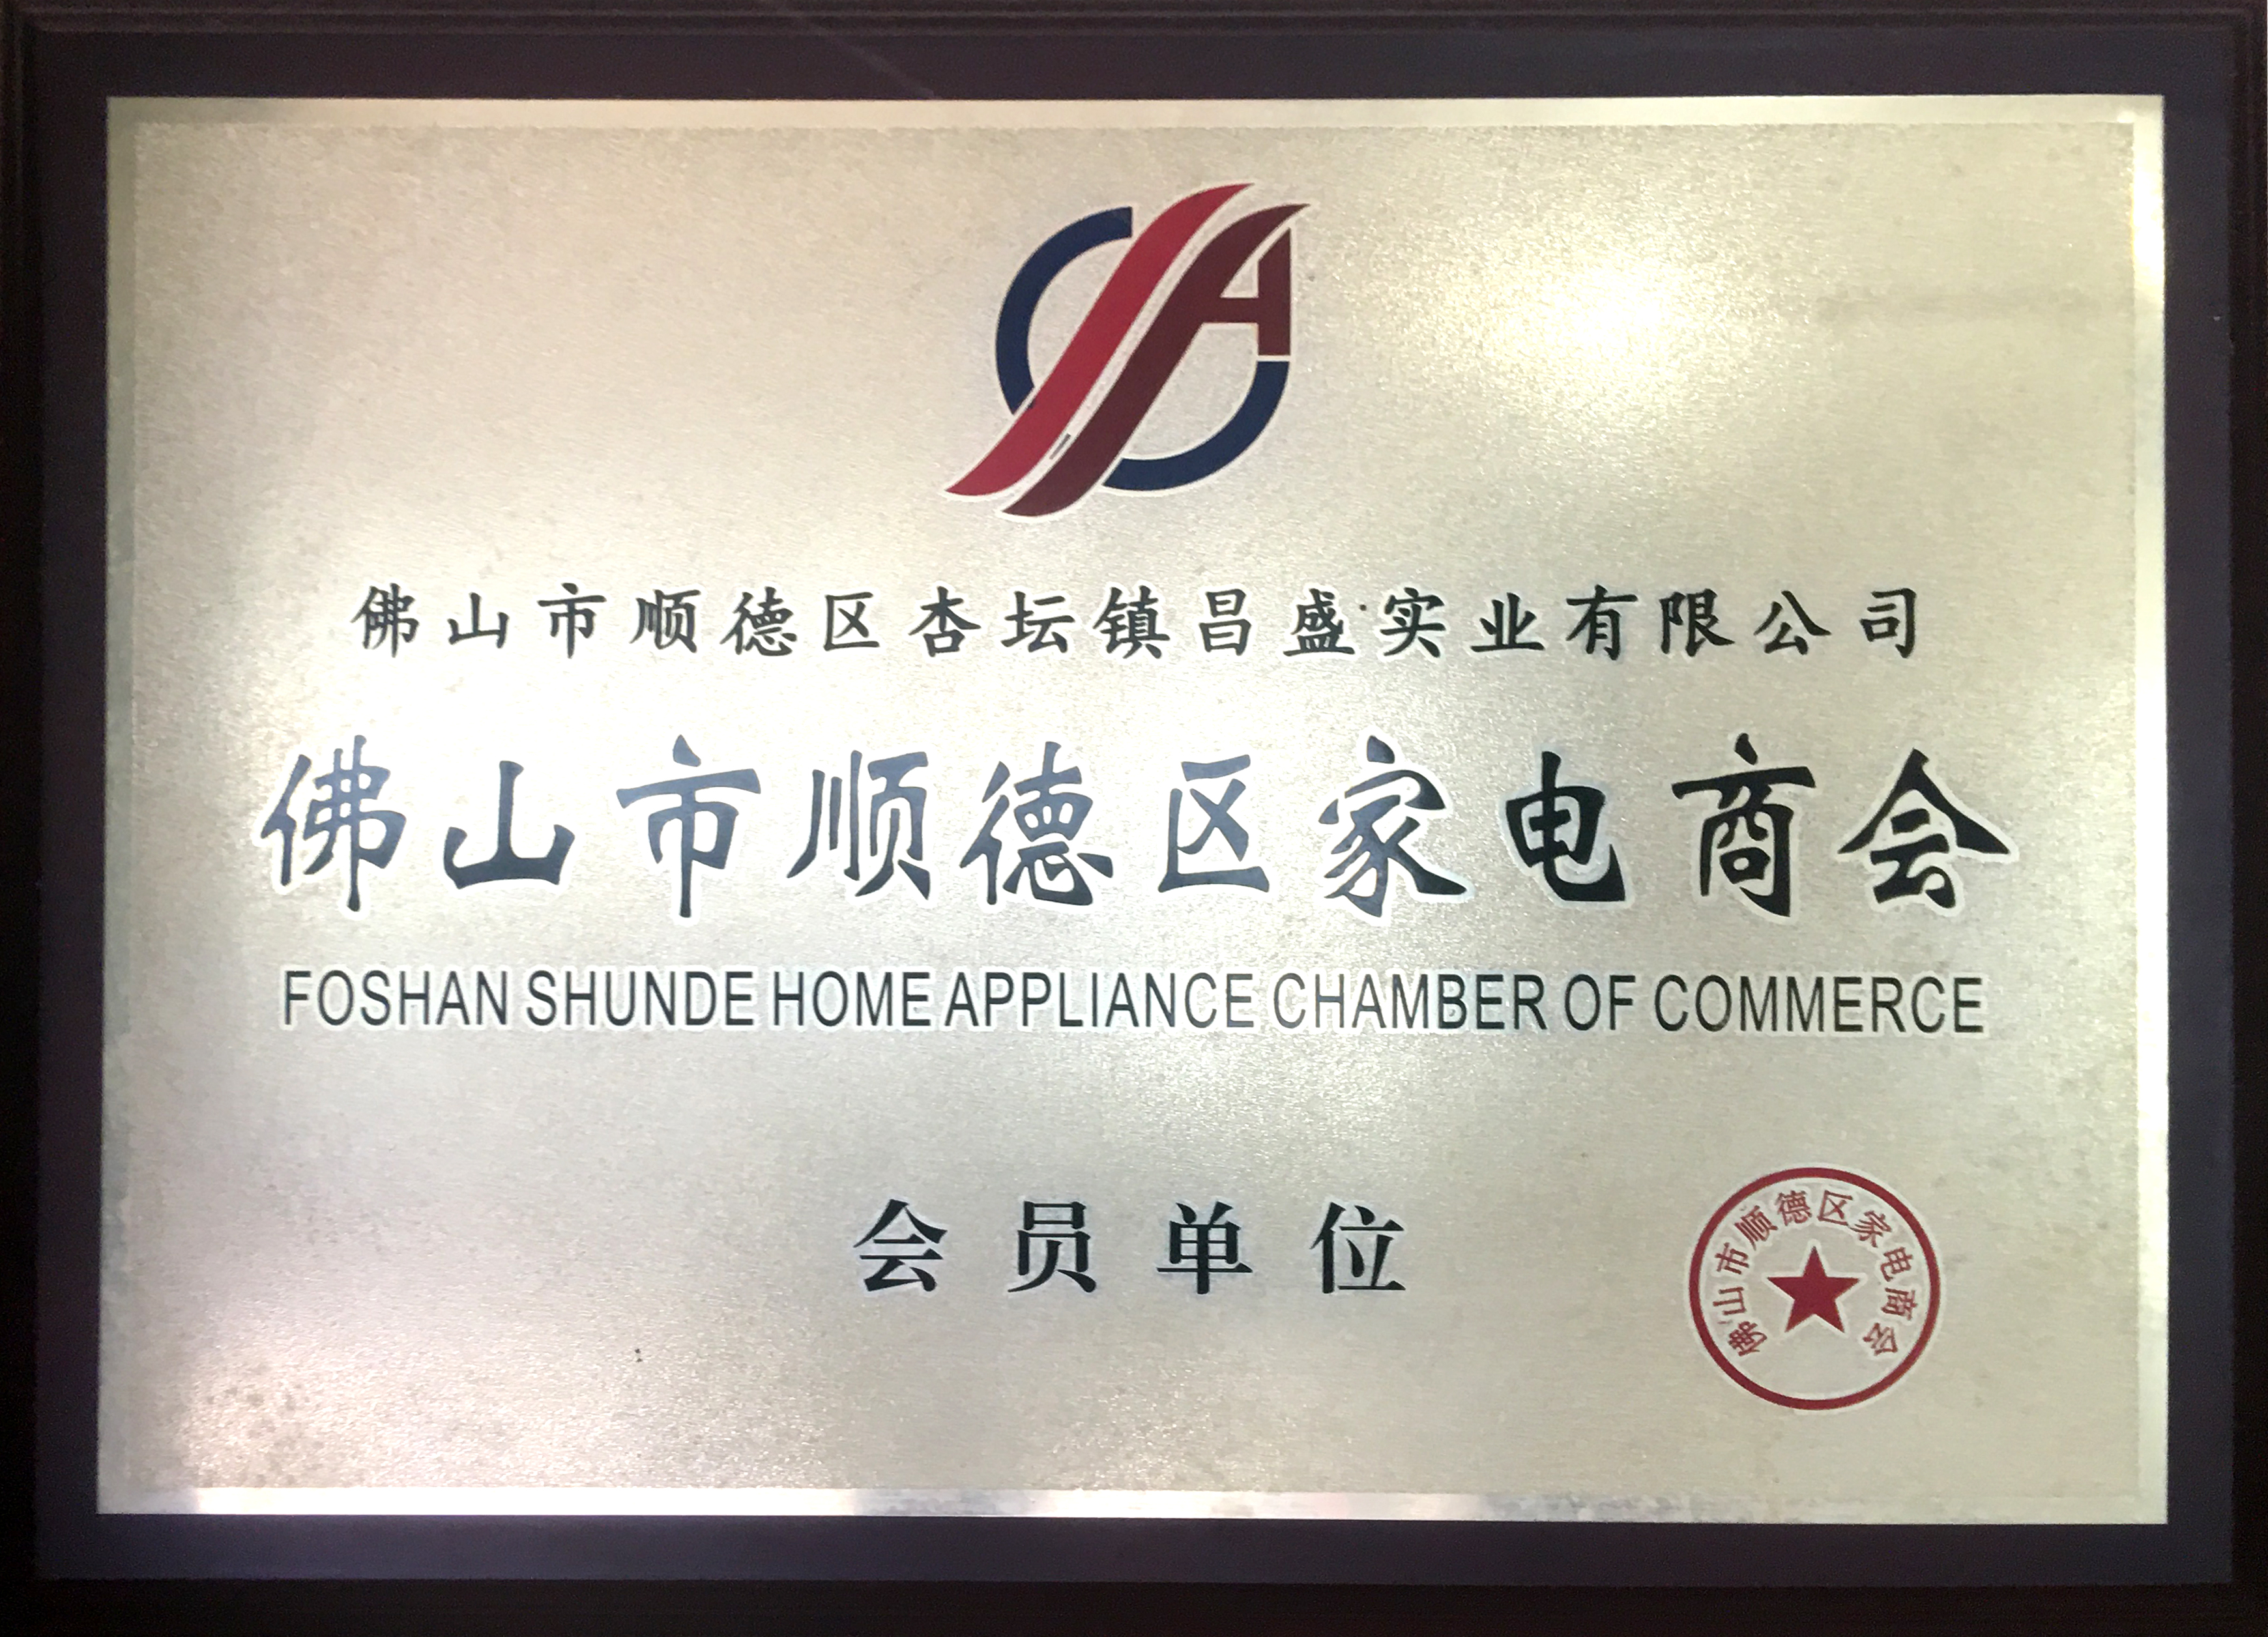 Home Appliances Chamber of Commerce, Shunde District, Foshan City